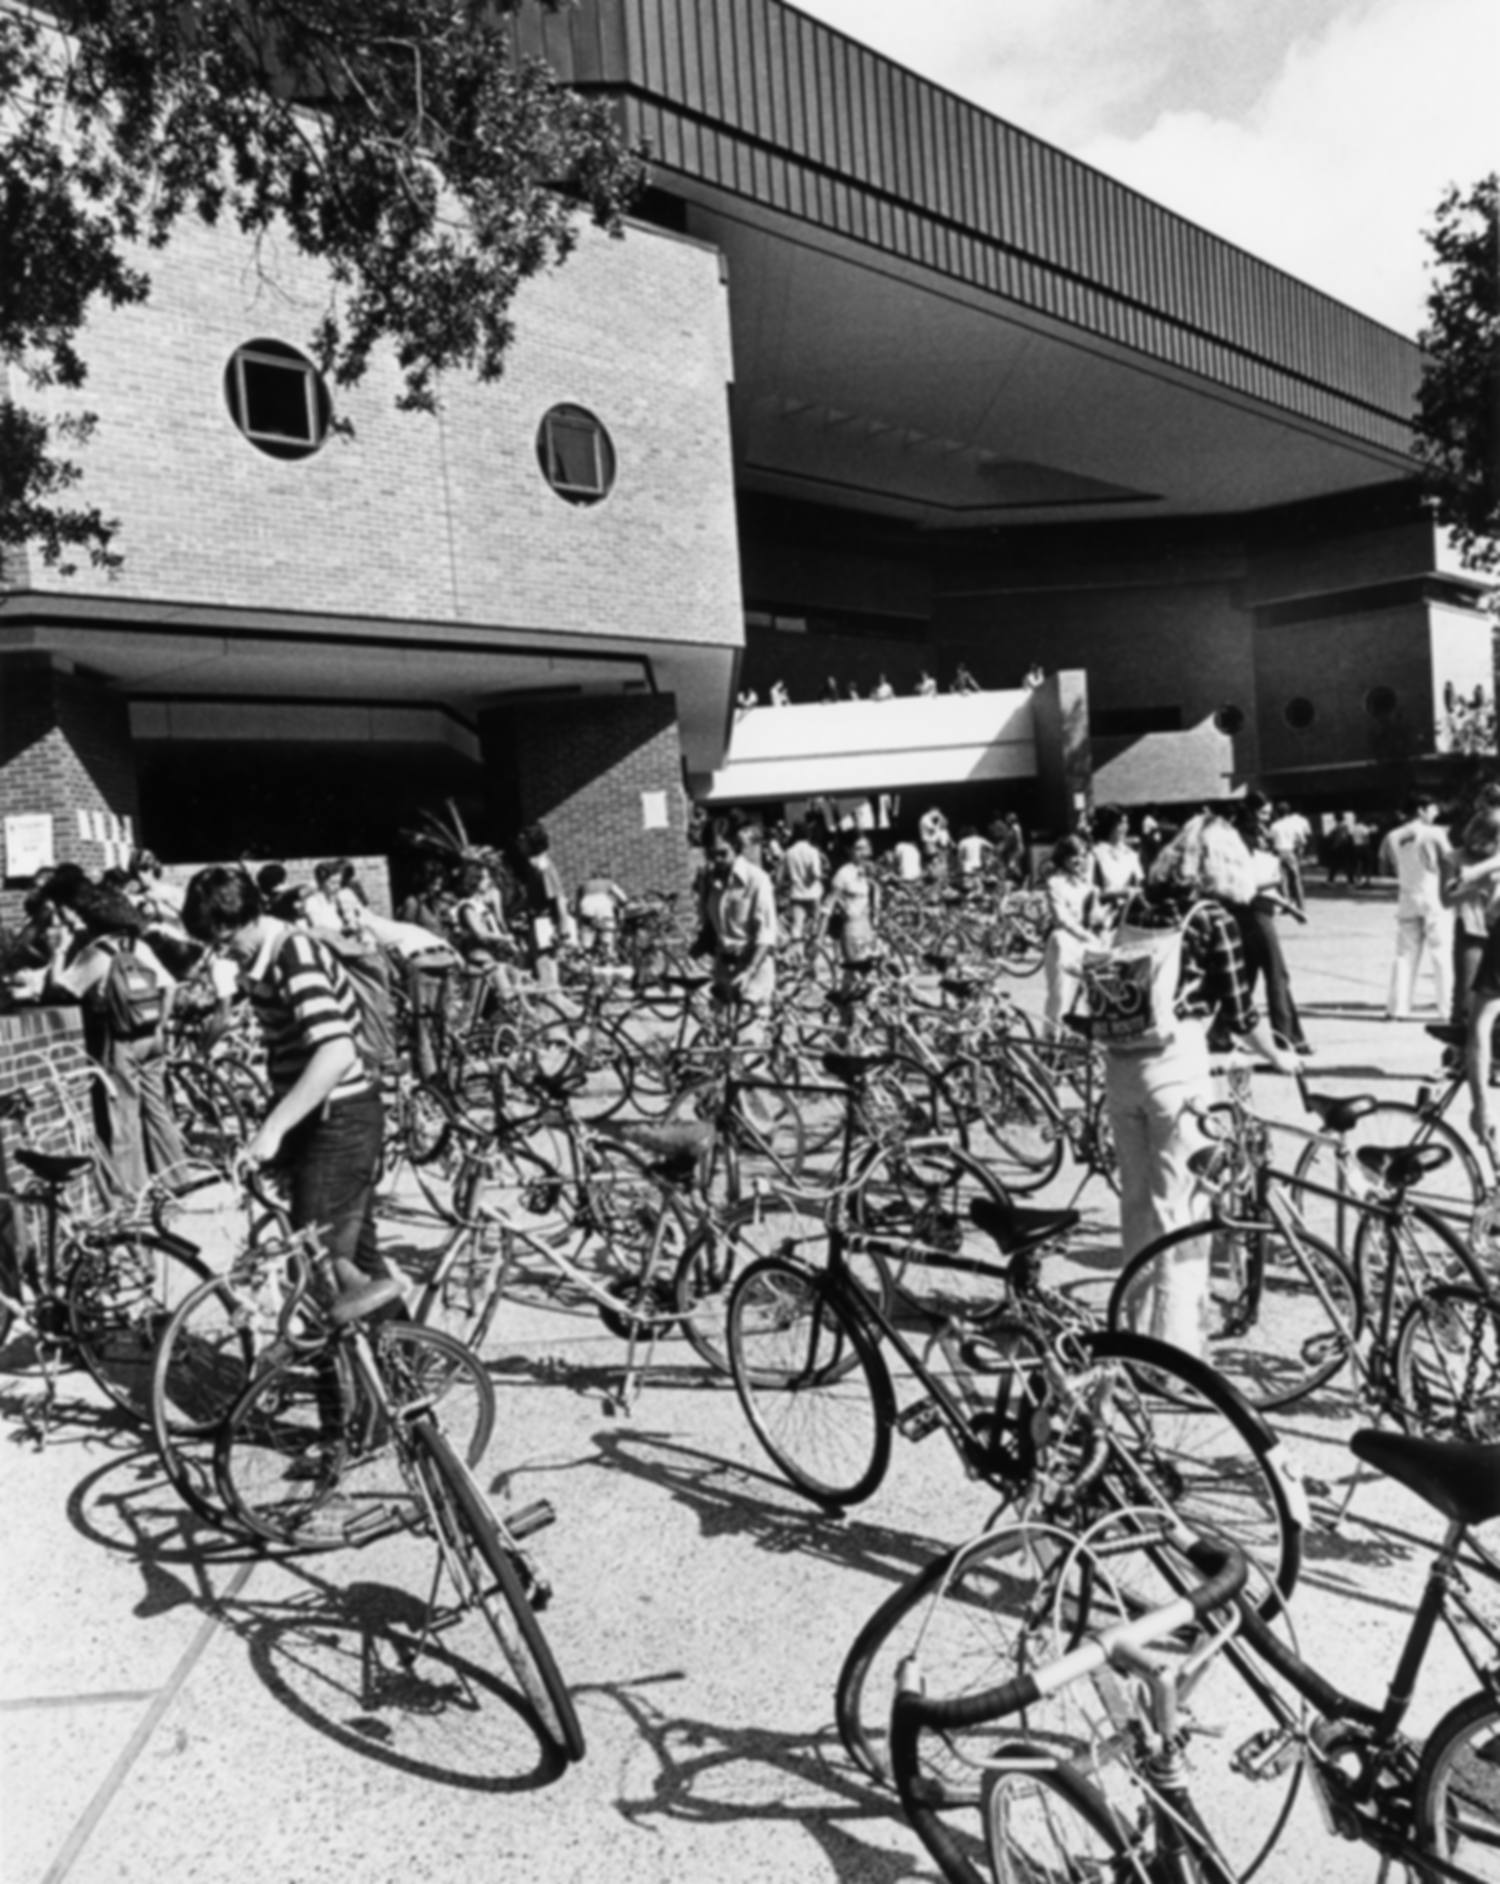 Bikes at parked at Turlington Hall c. 1980